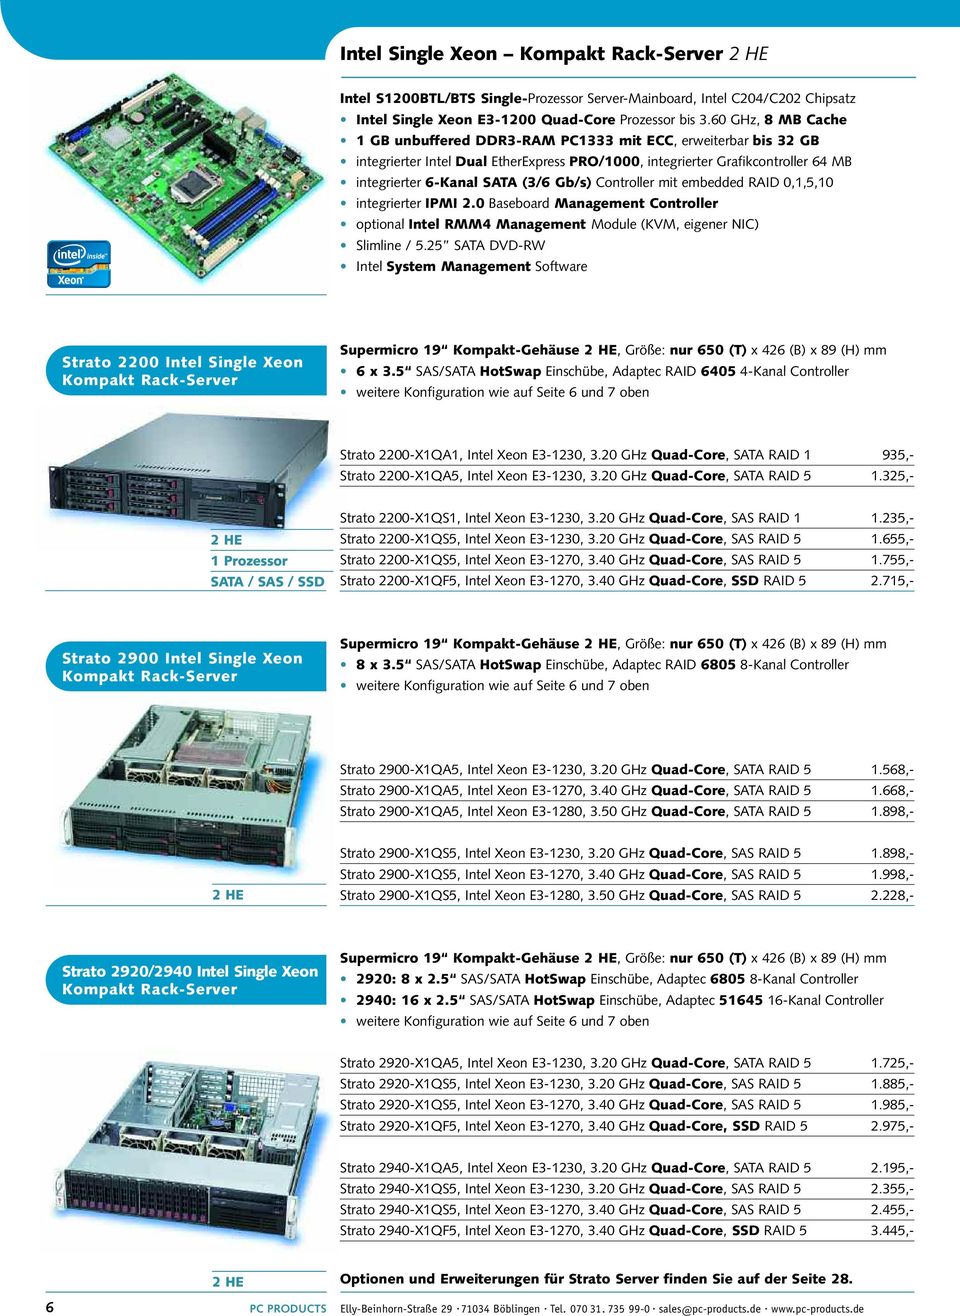 Gb/s) Controller mit embedded RAID 0,1,5,10 integrierter IPMI 2.0 Baseboard Management Controller optional Intel RMM4 Management Module (KVM, eigener NIC) Slimline / 5.